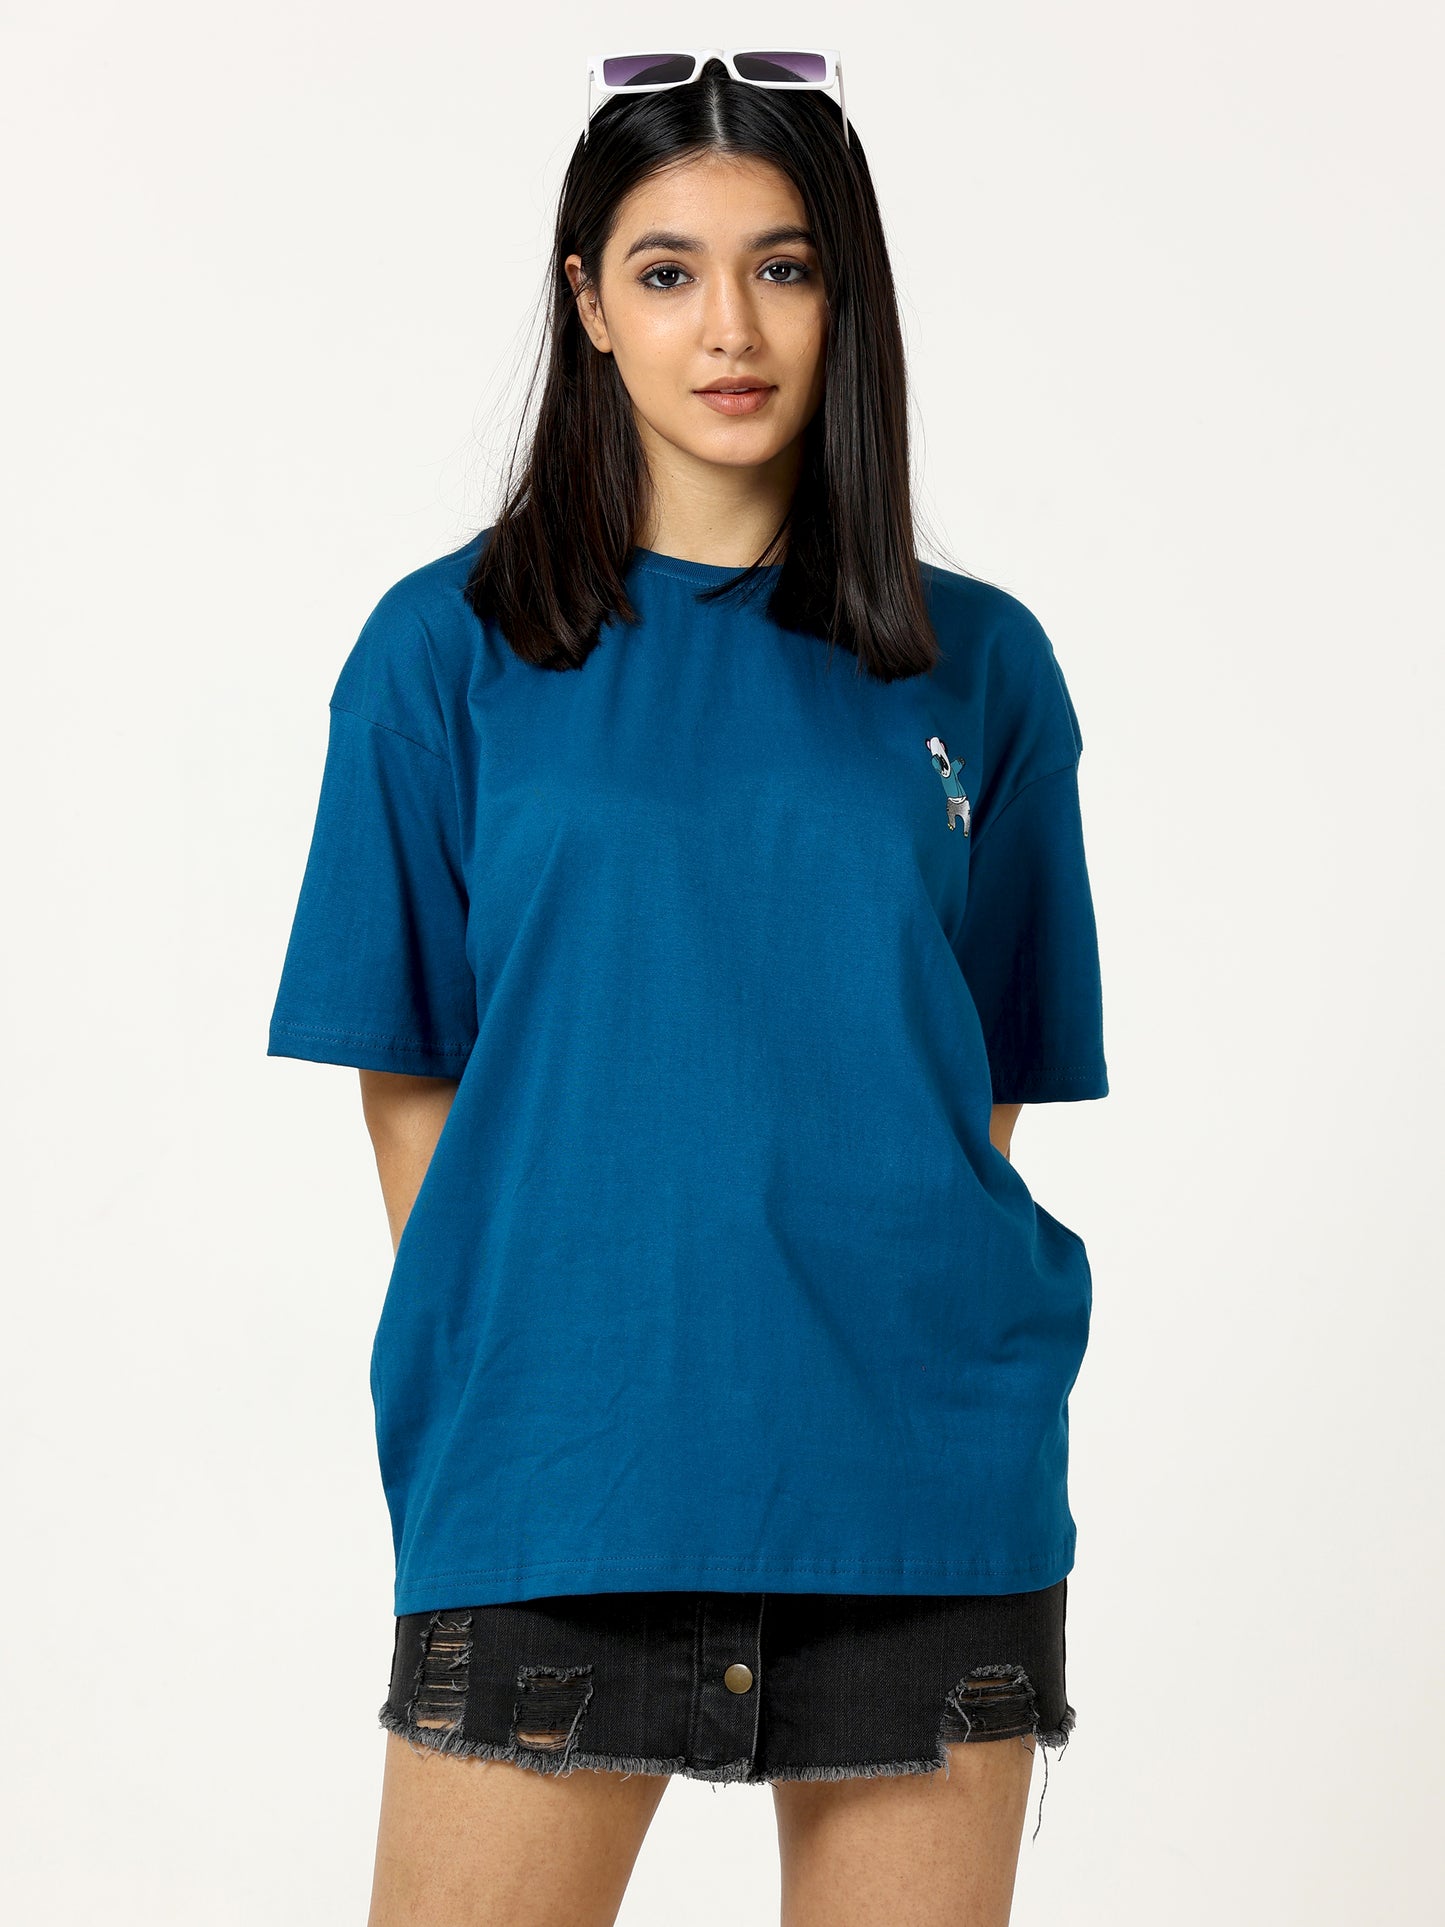 Navy Blue Panda Printed Oversized T-shirt - UNISEX